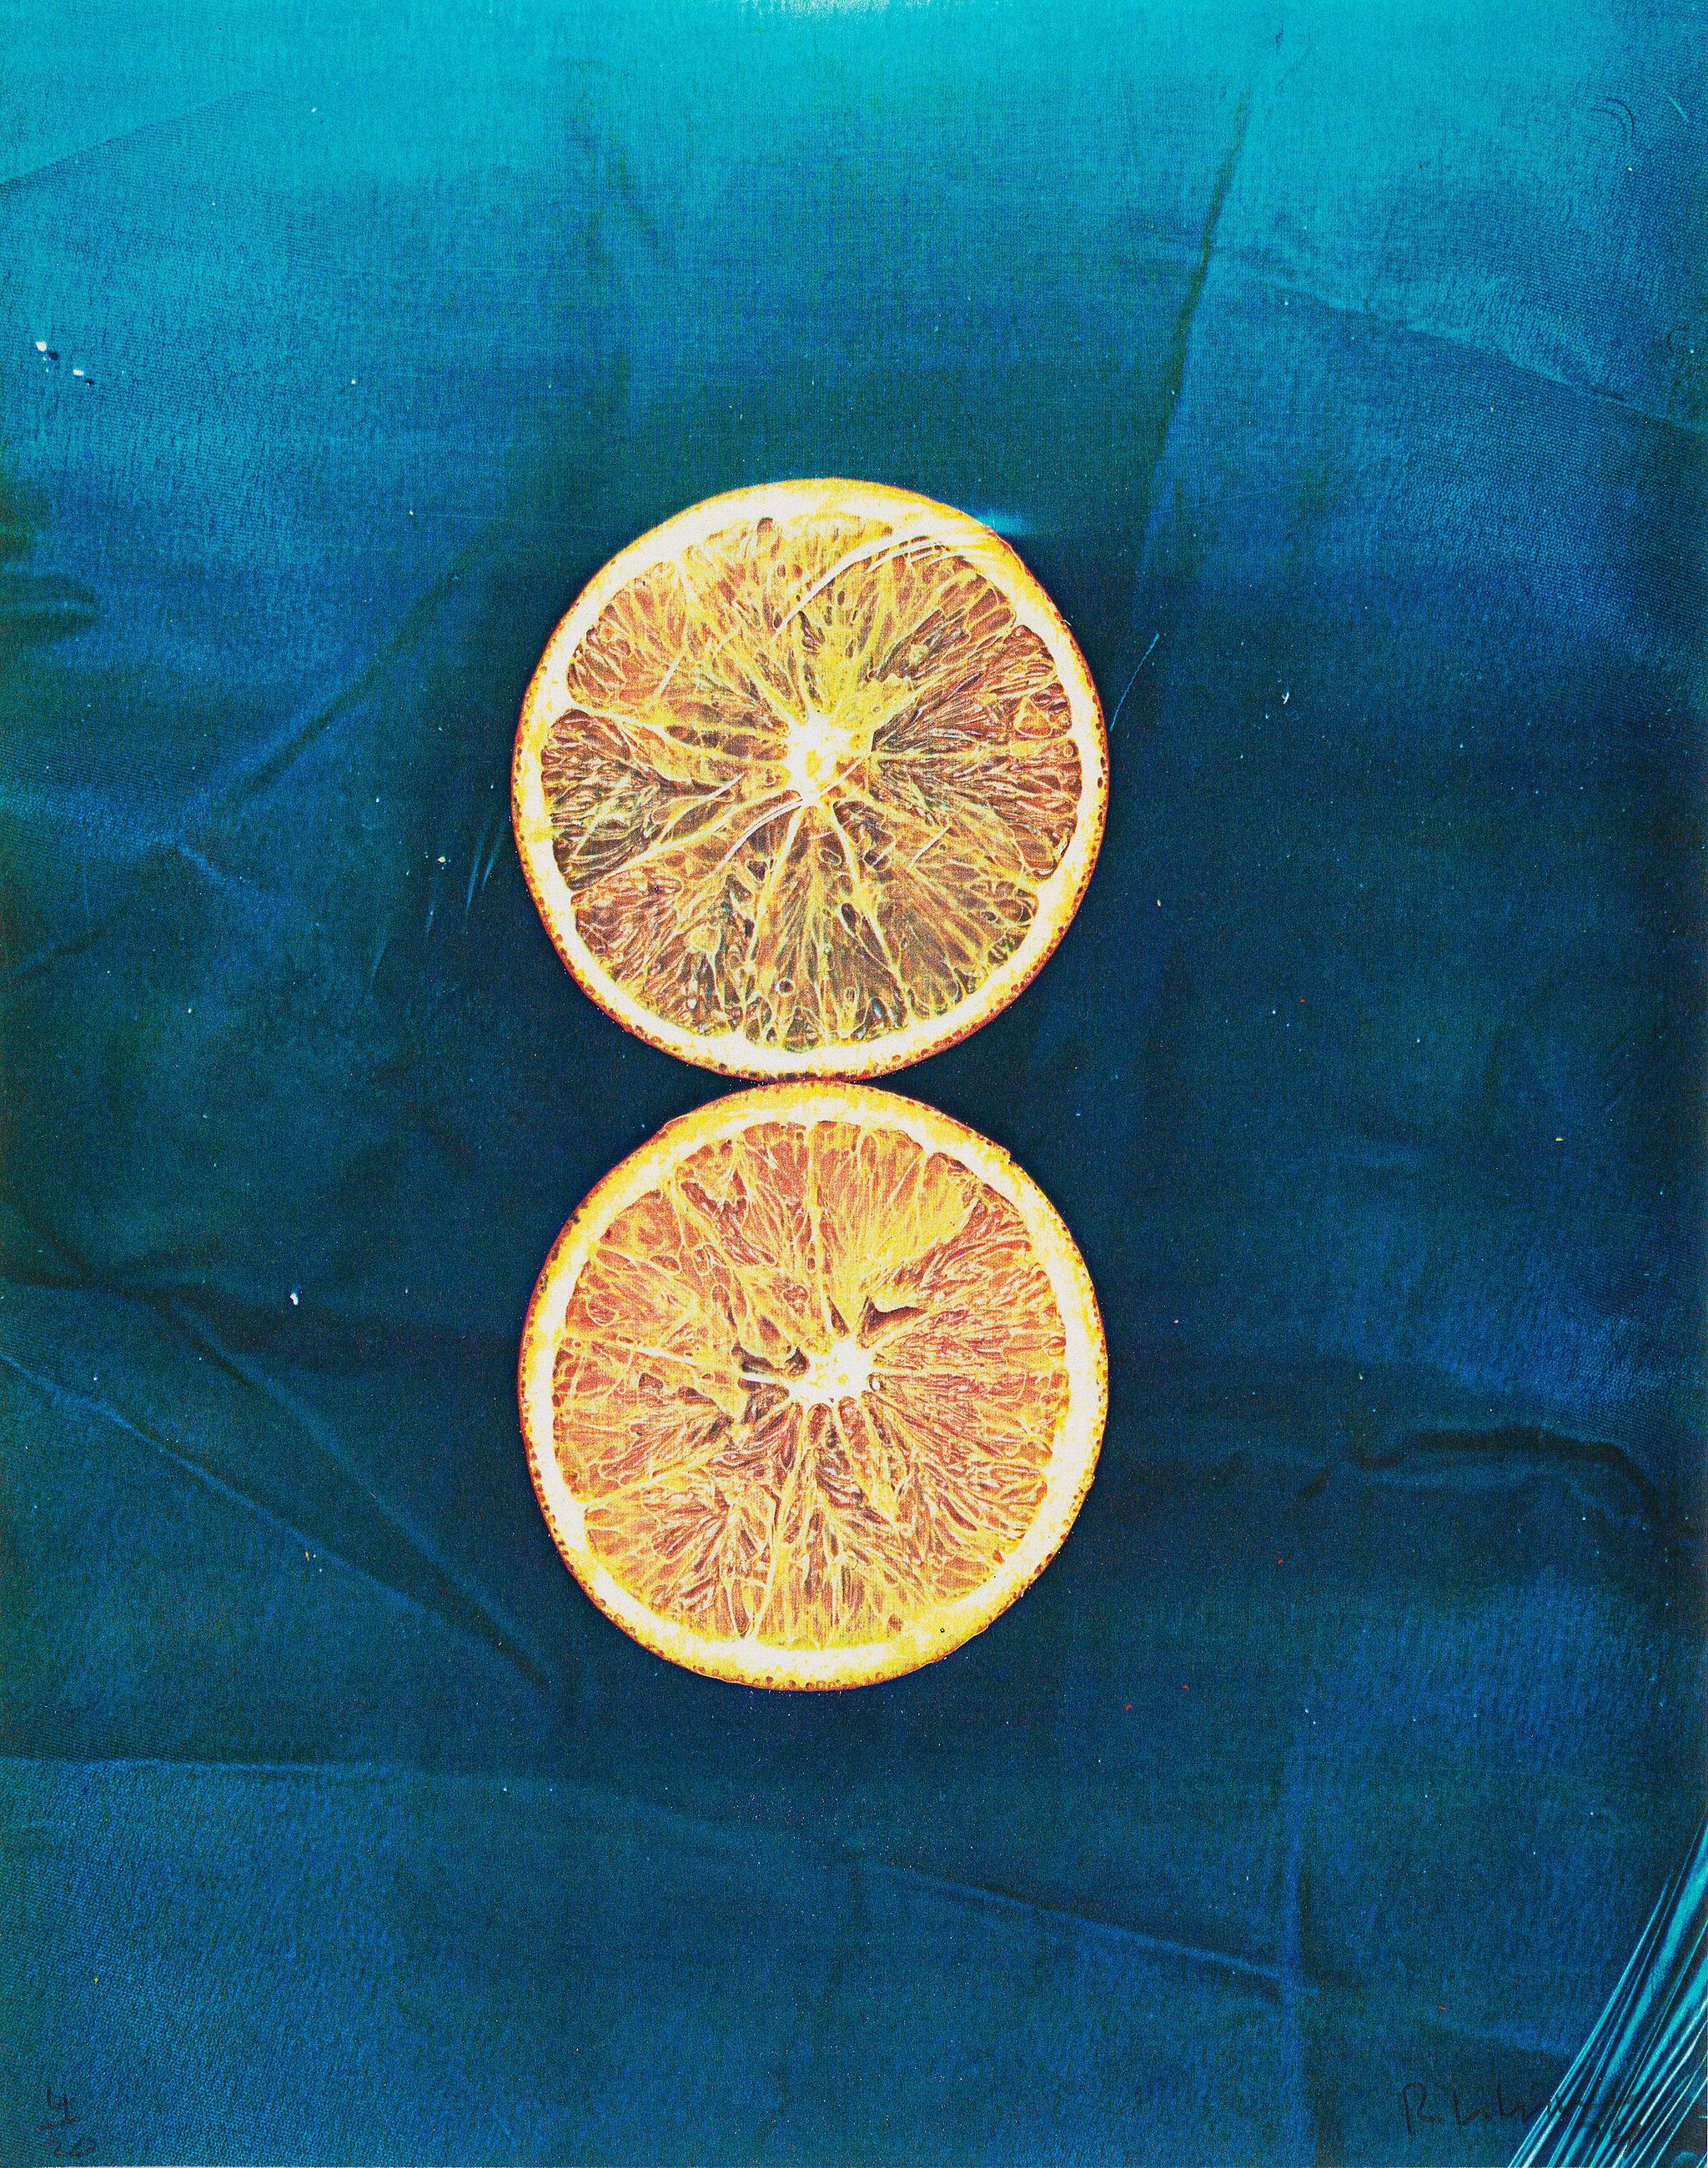 Photocopy of an orange.